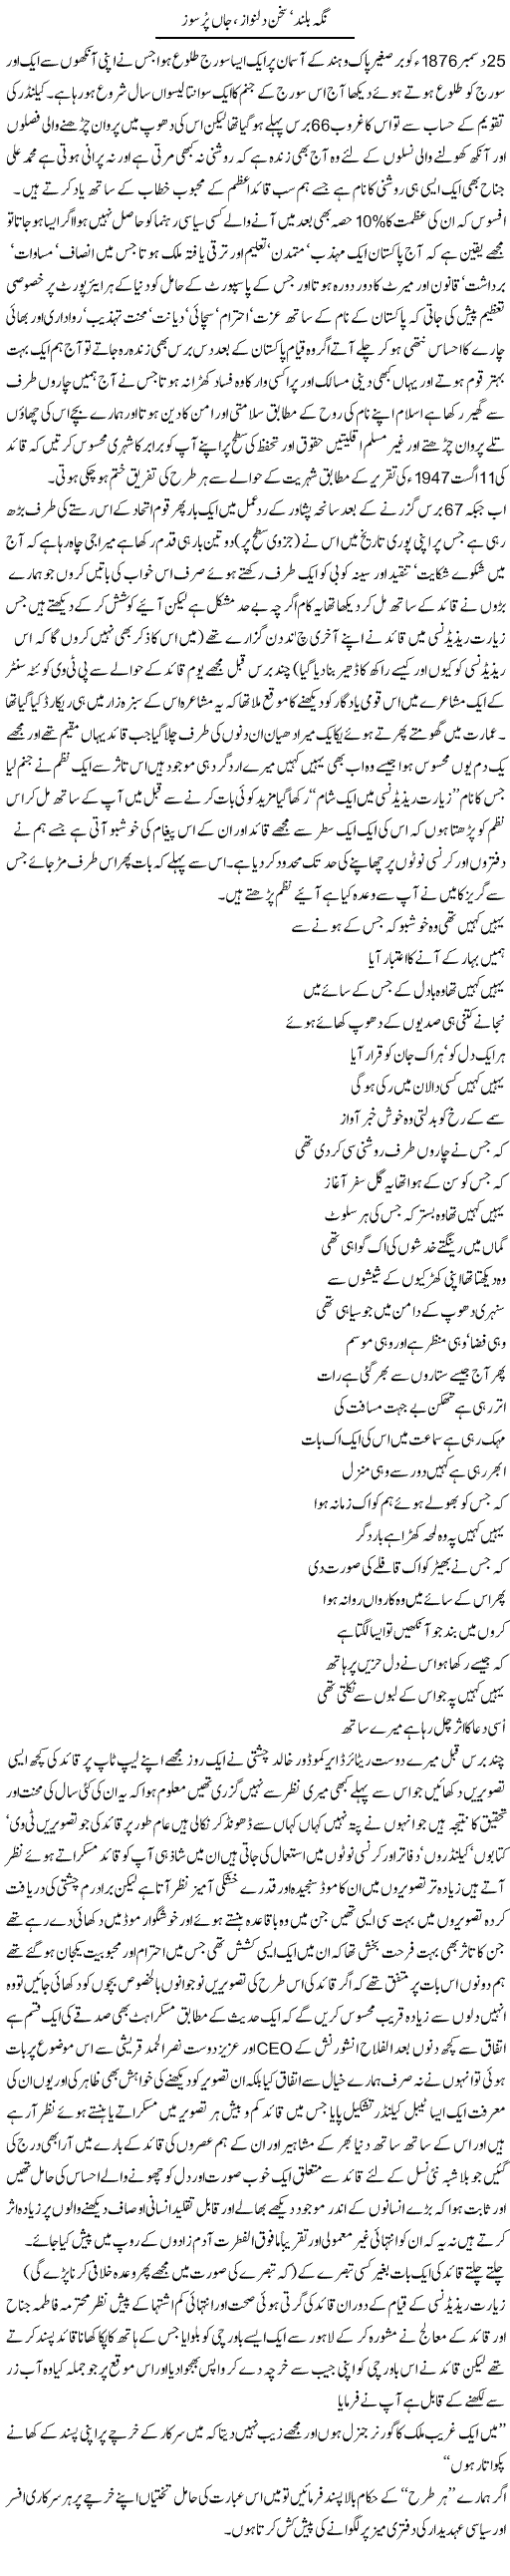 Ngah Buland, Sukhan Dilnawaz, Jaan Pursoz | Amjad Islam Amjad | Daily Urdu Columns